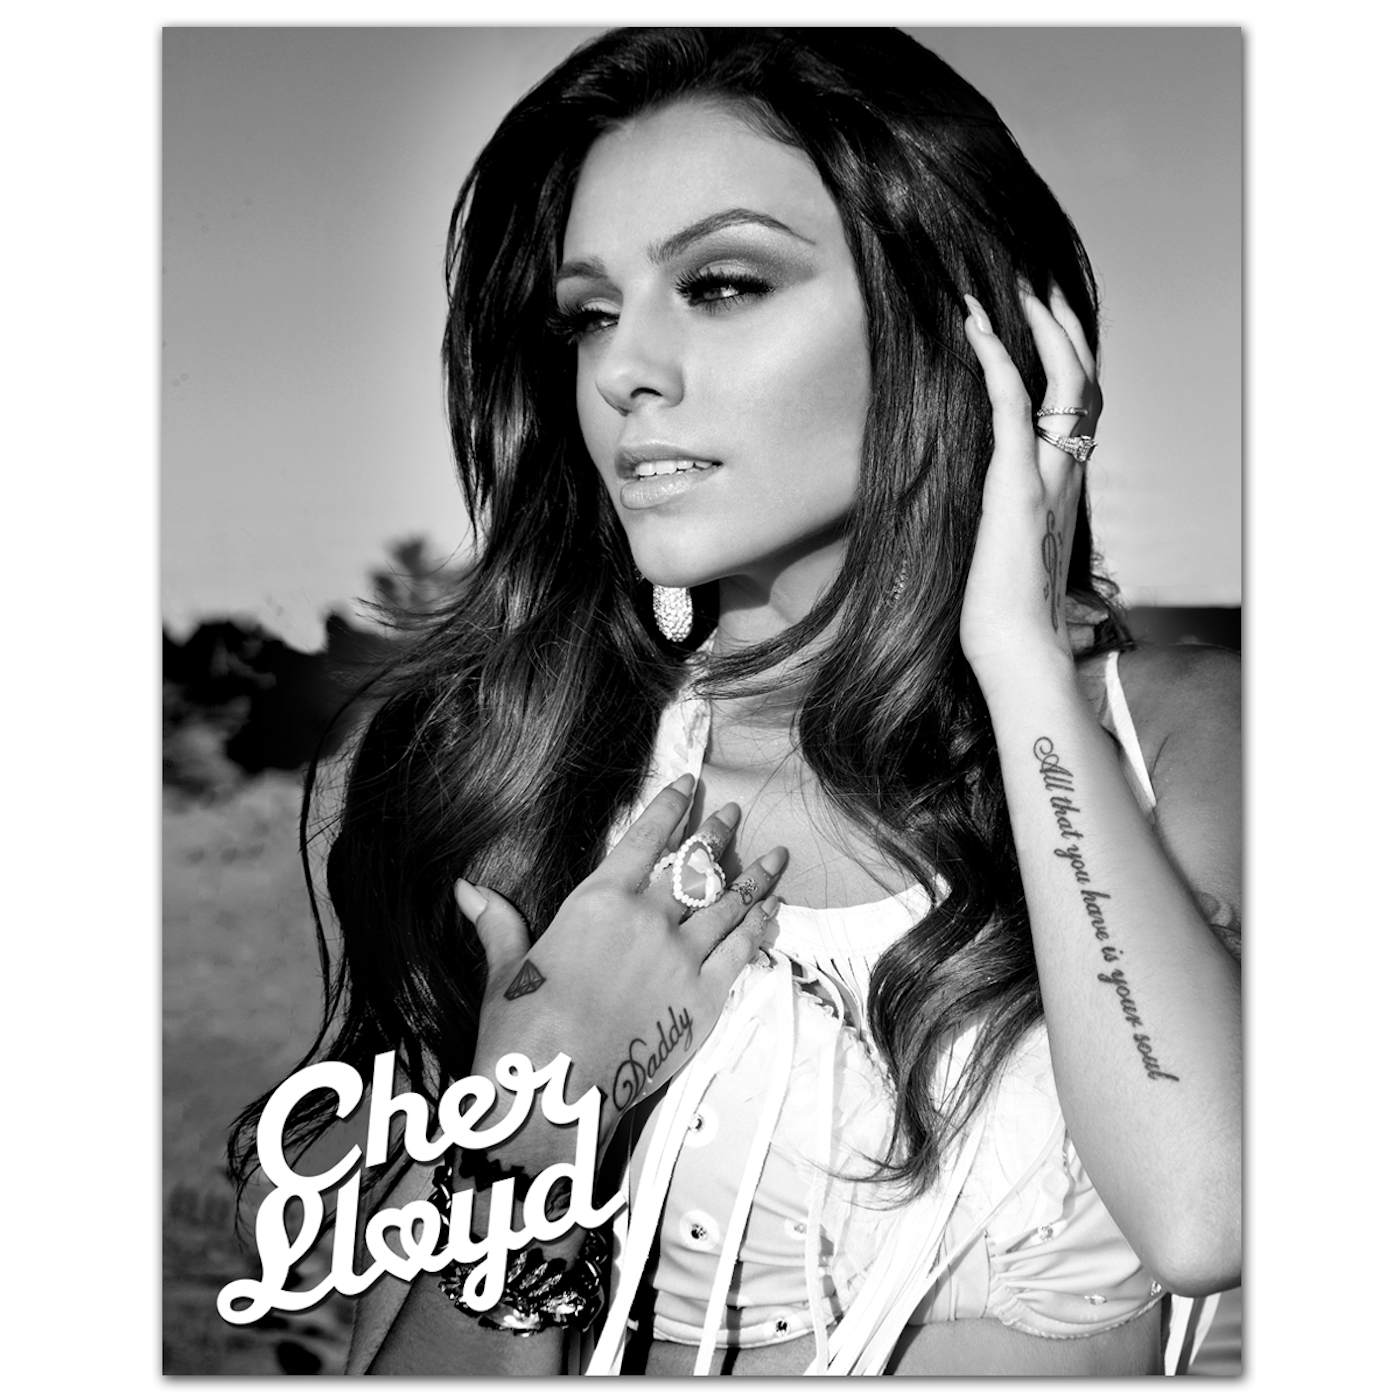 Cher Lloyd With Love 8"x10" Photo